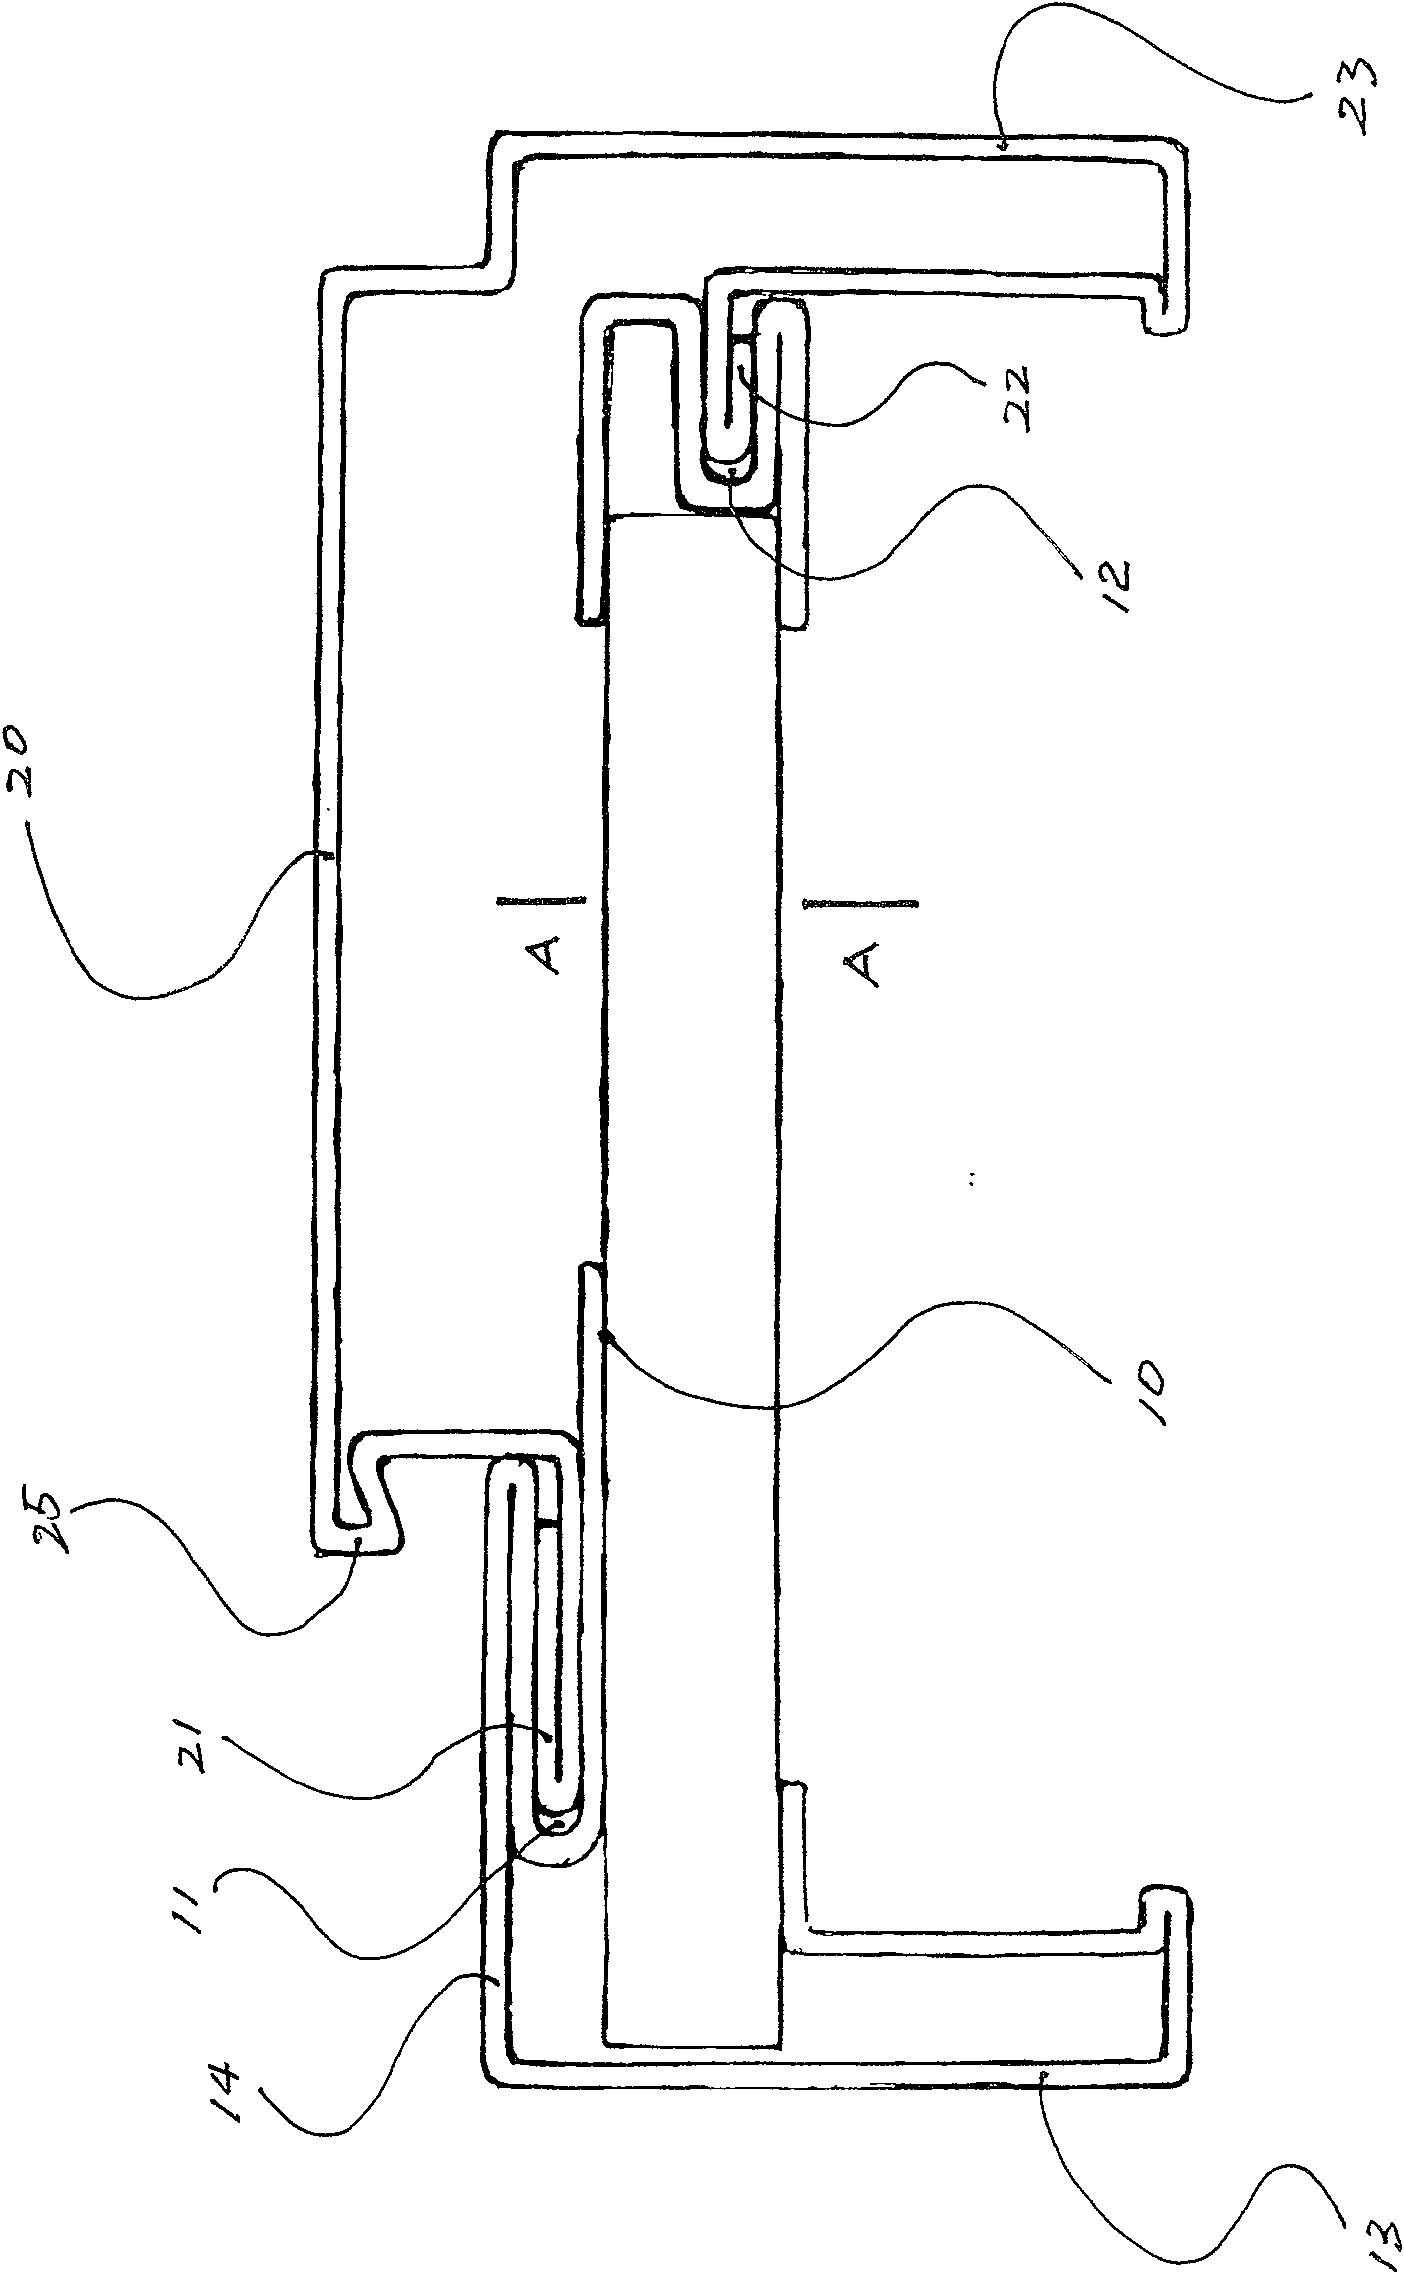 Combined steel door frame and its mounting method